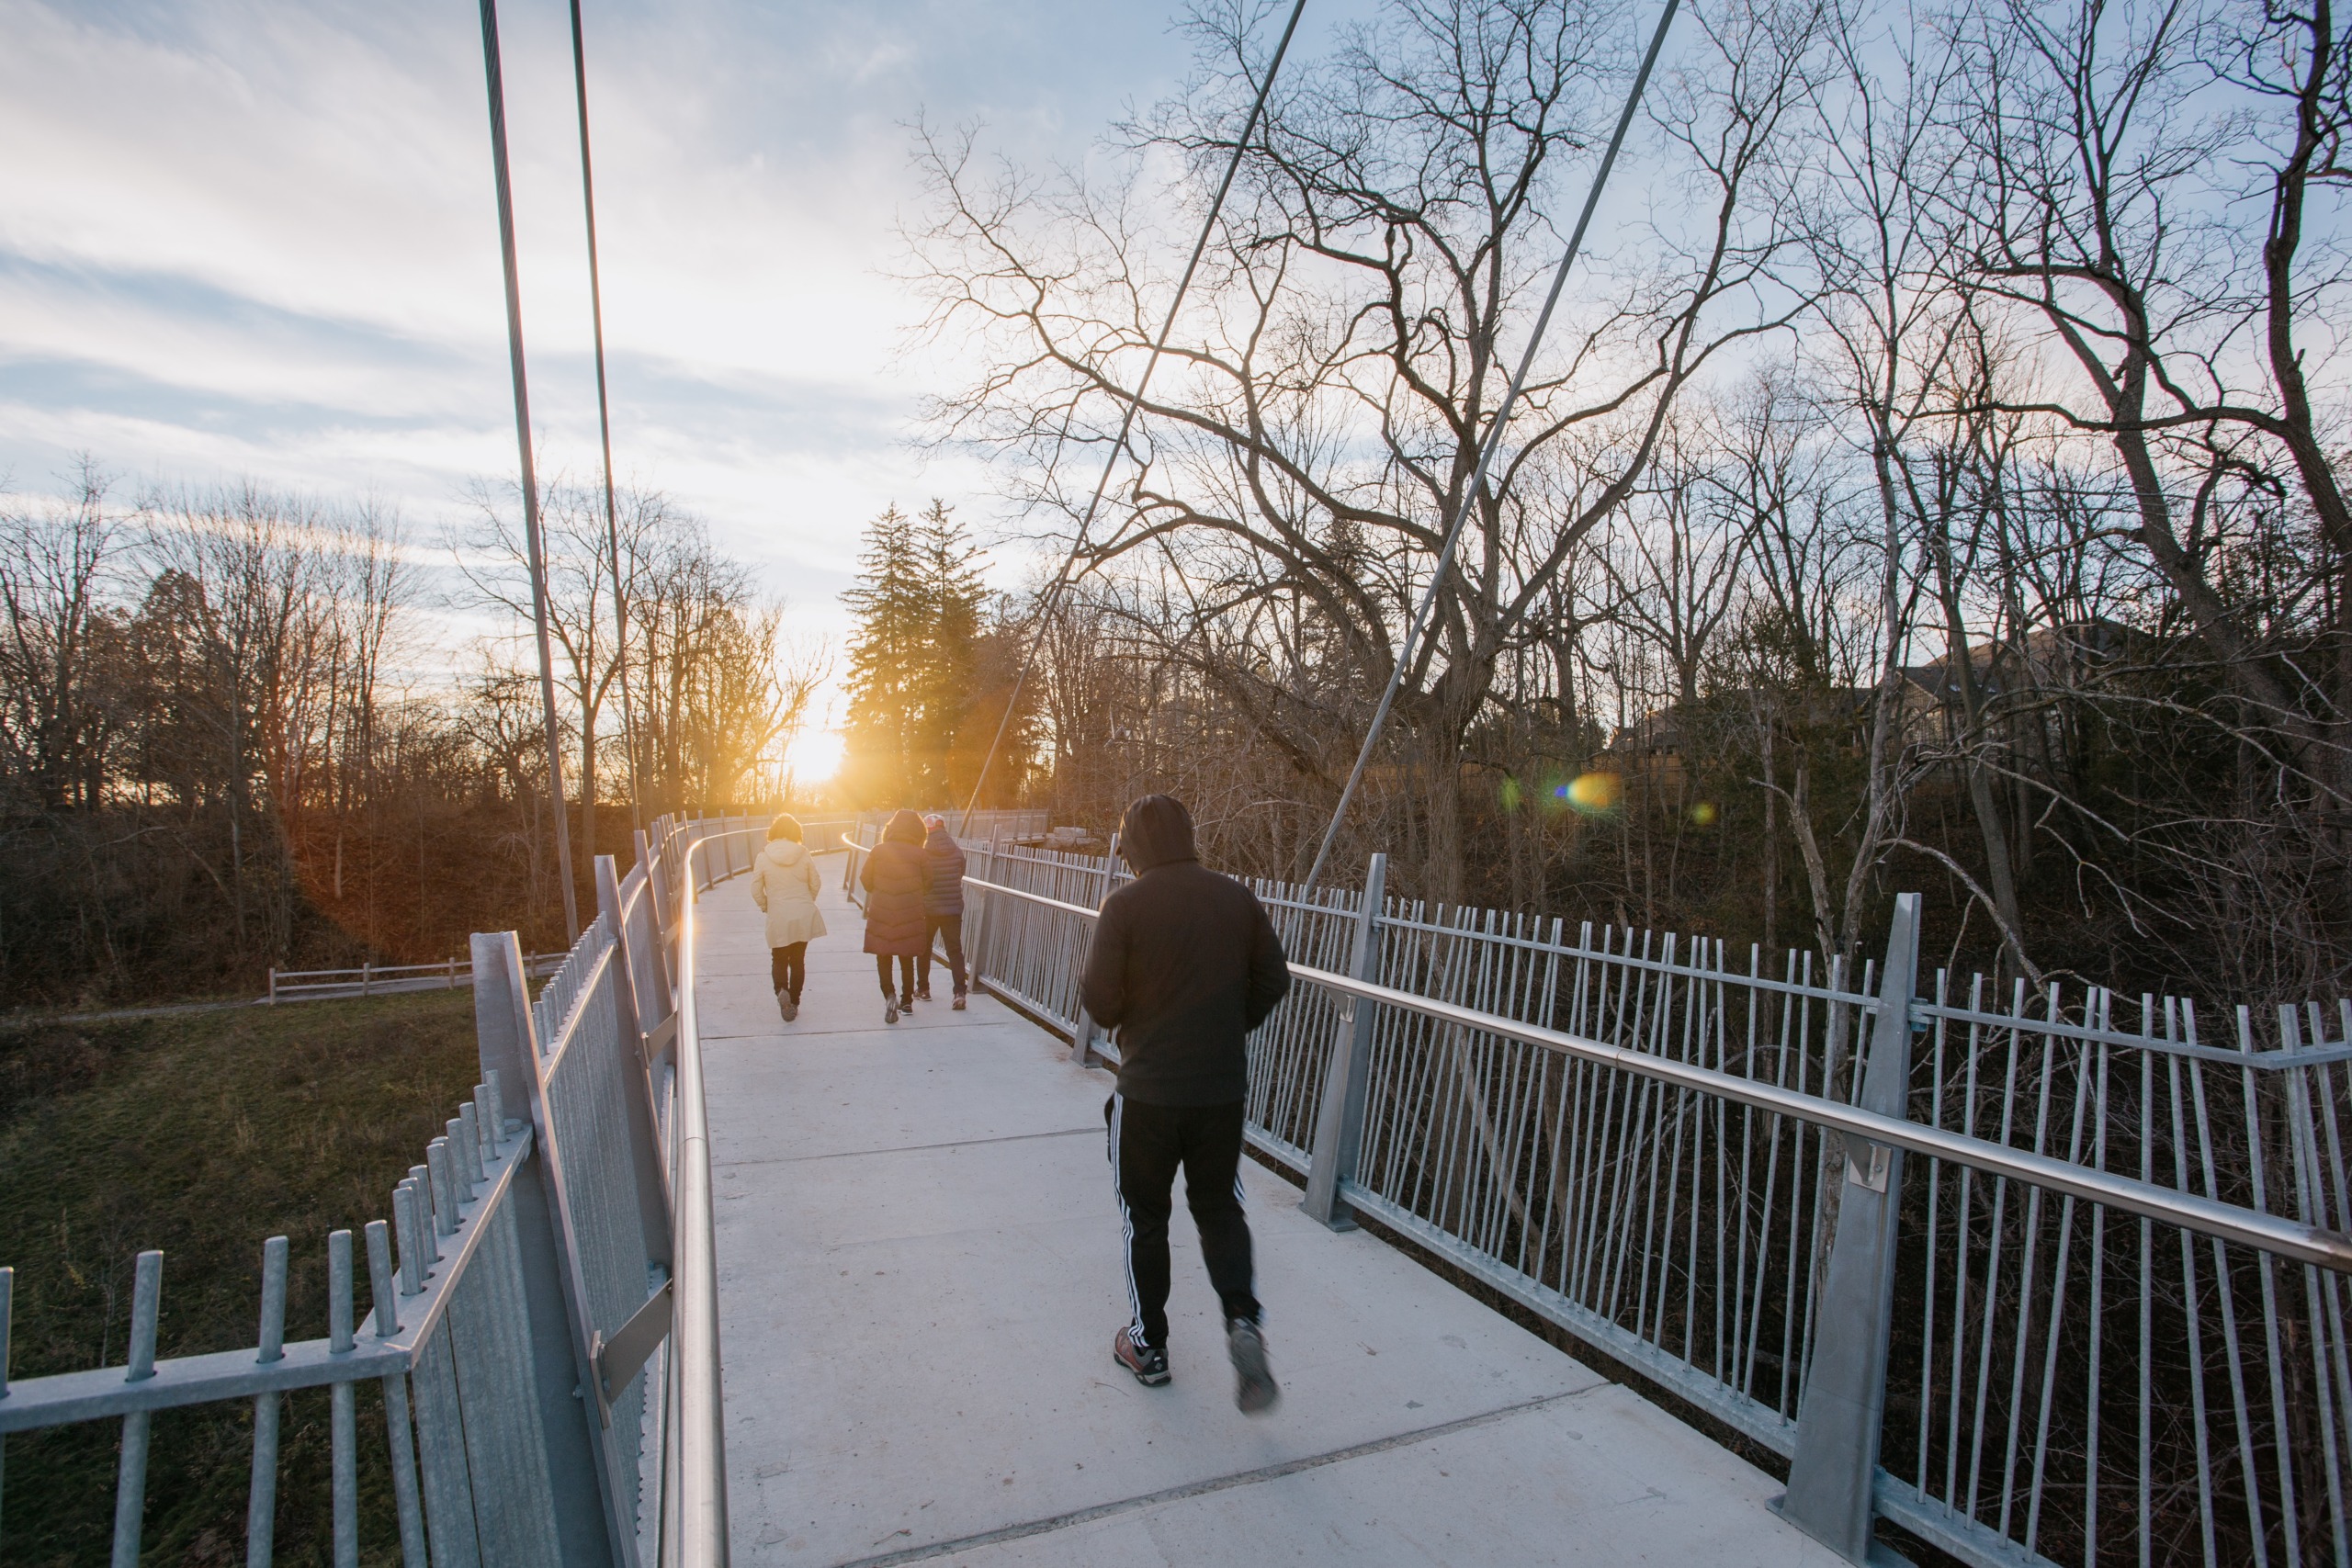 People walking in Markham, Ontario, Canada.